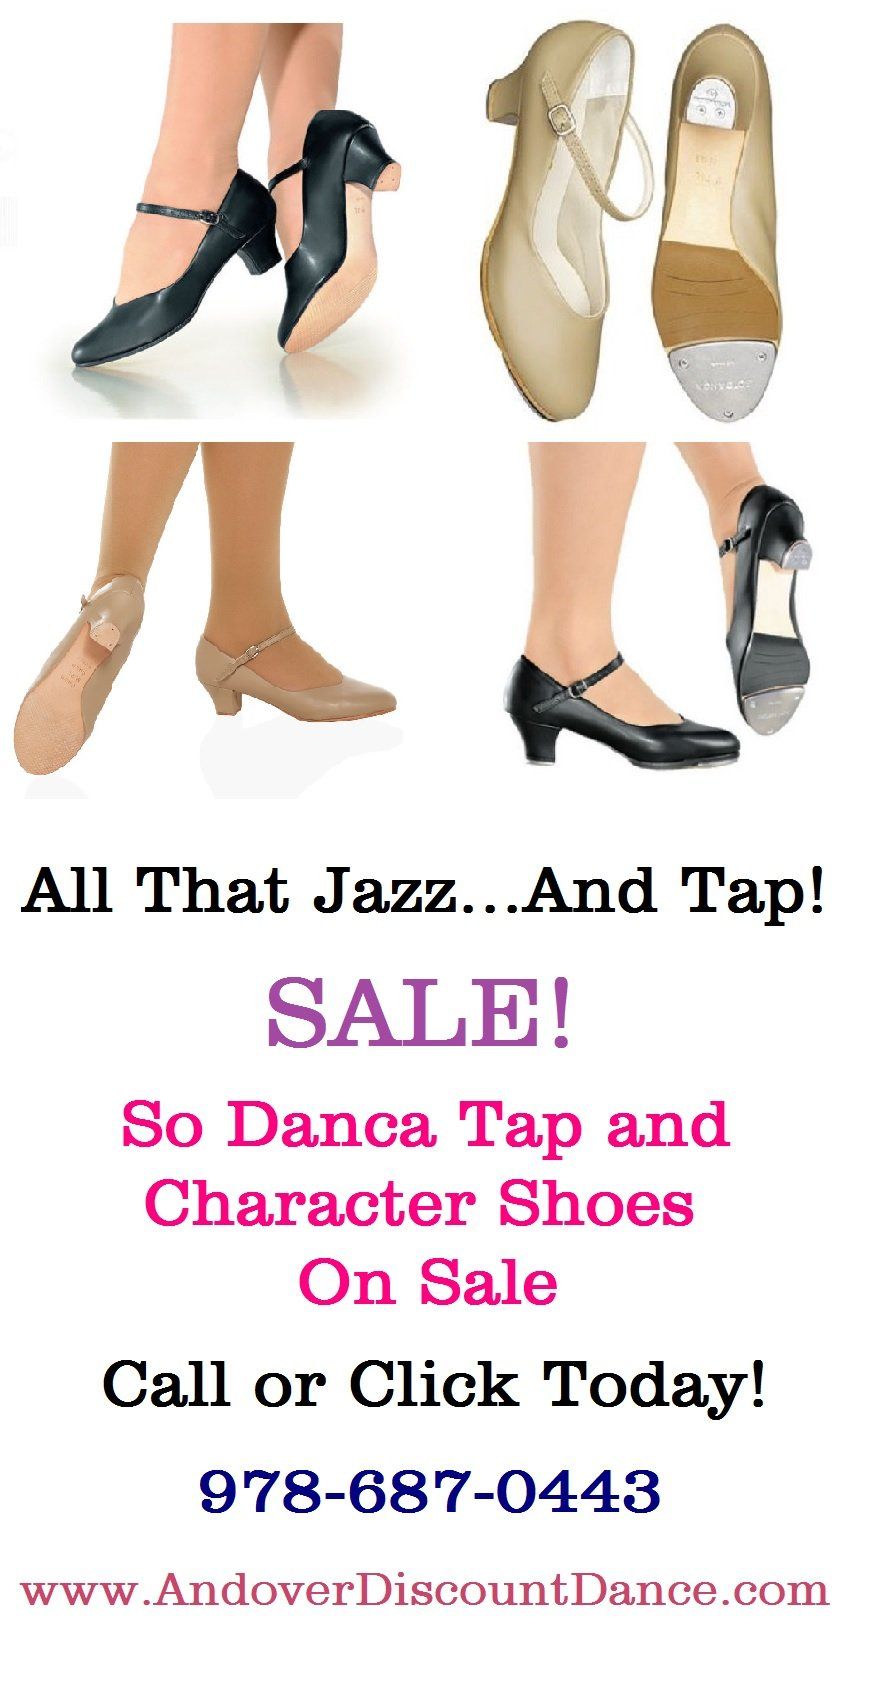 So Danca shoe sale Ad